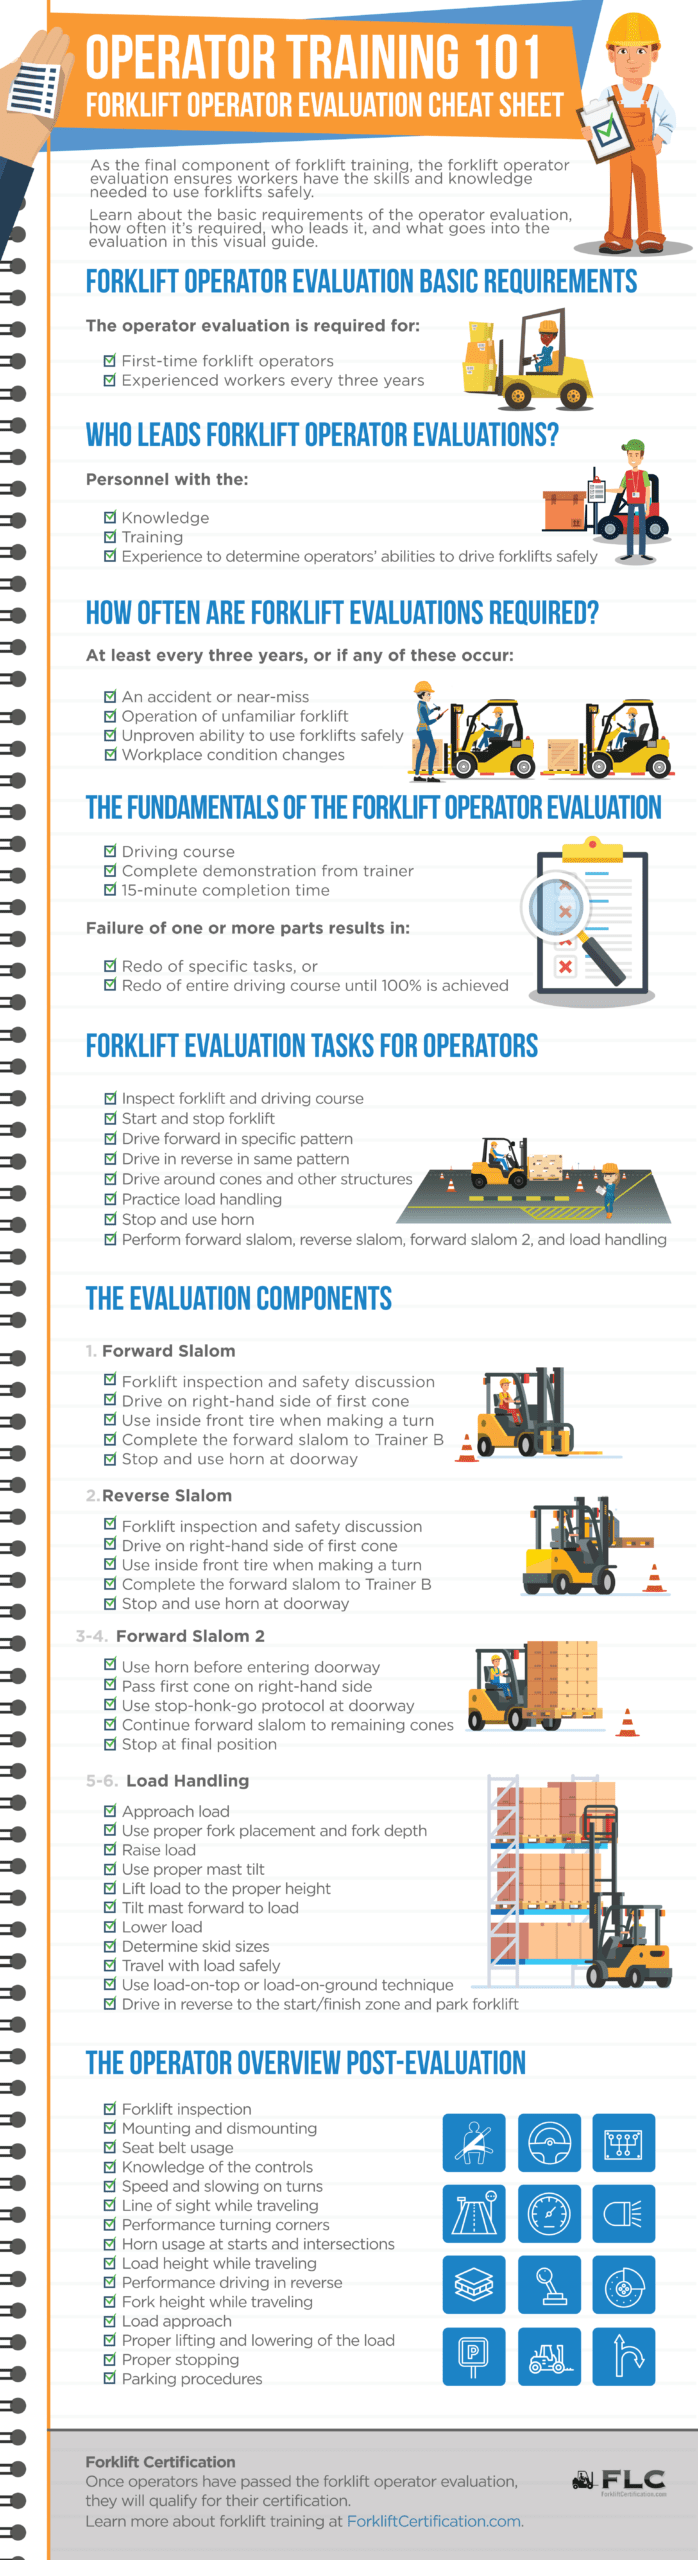 The Flc Guide To The Forklift Driver Evaluation Form Regarding Forklift Certification Template